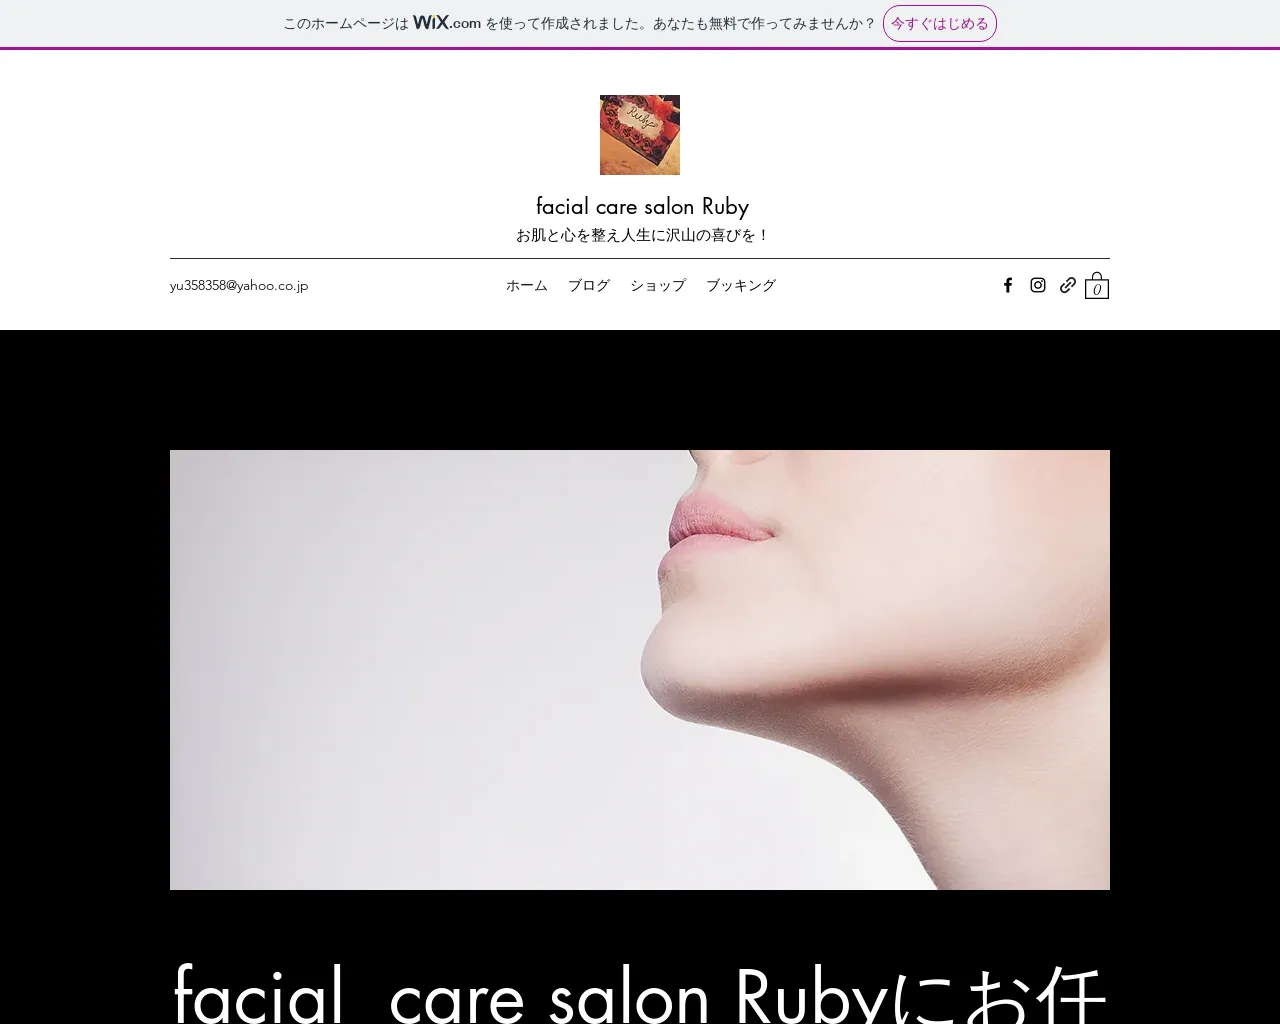 facial care salon Ruby site